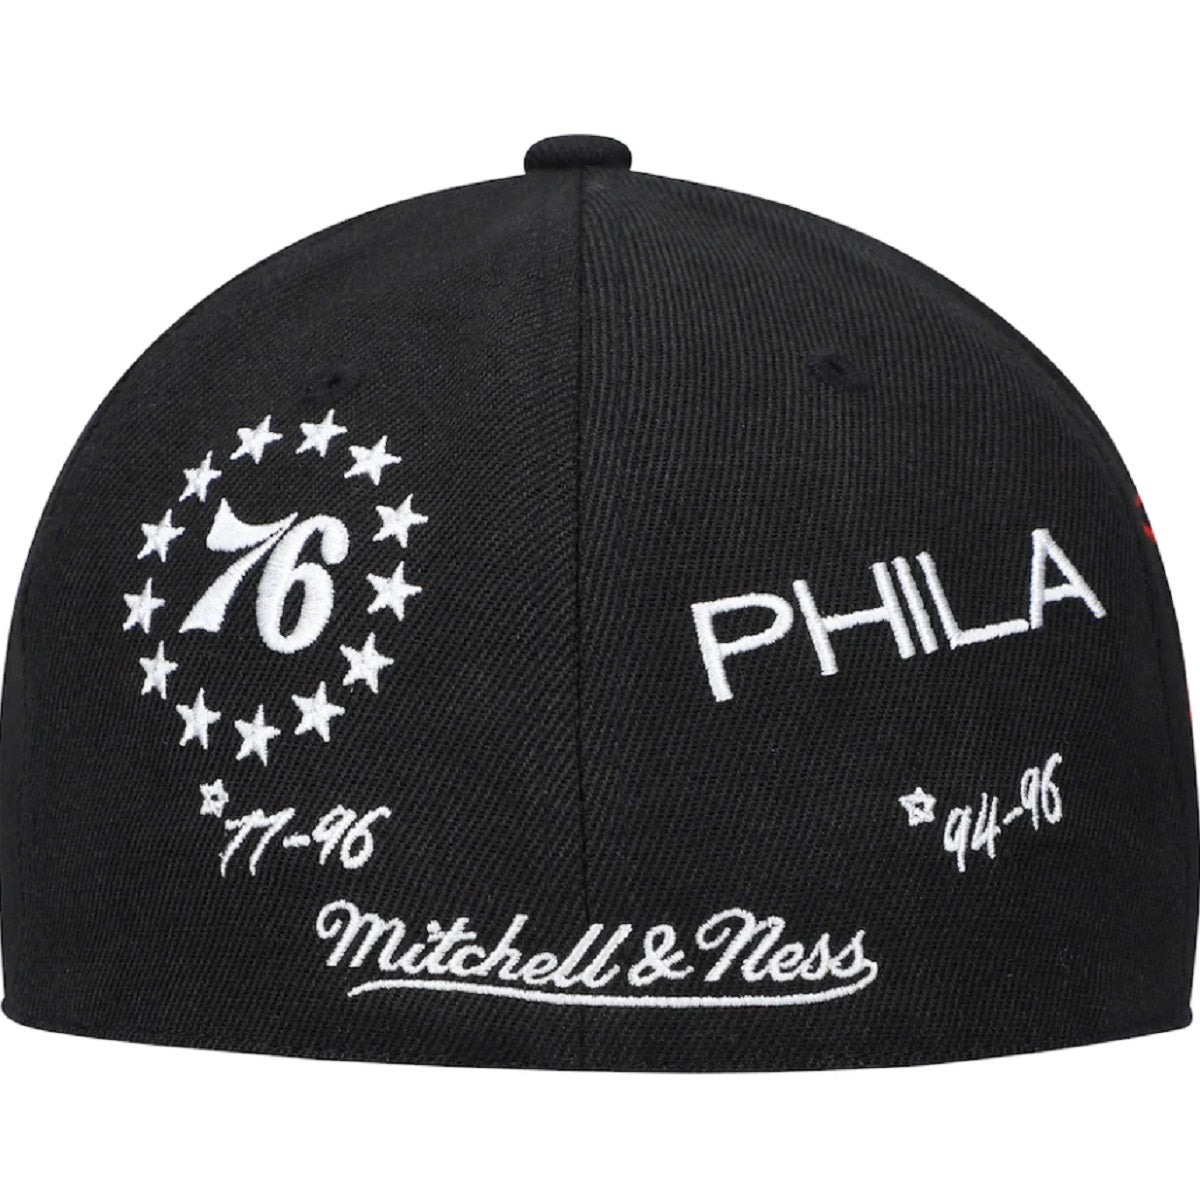 Philadelphia 76ers Mitchell & Ness Hardwood Classics Timeline Fitted Hat - Black